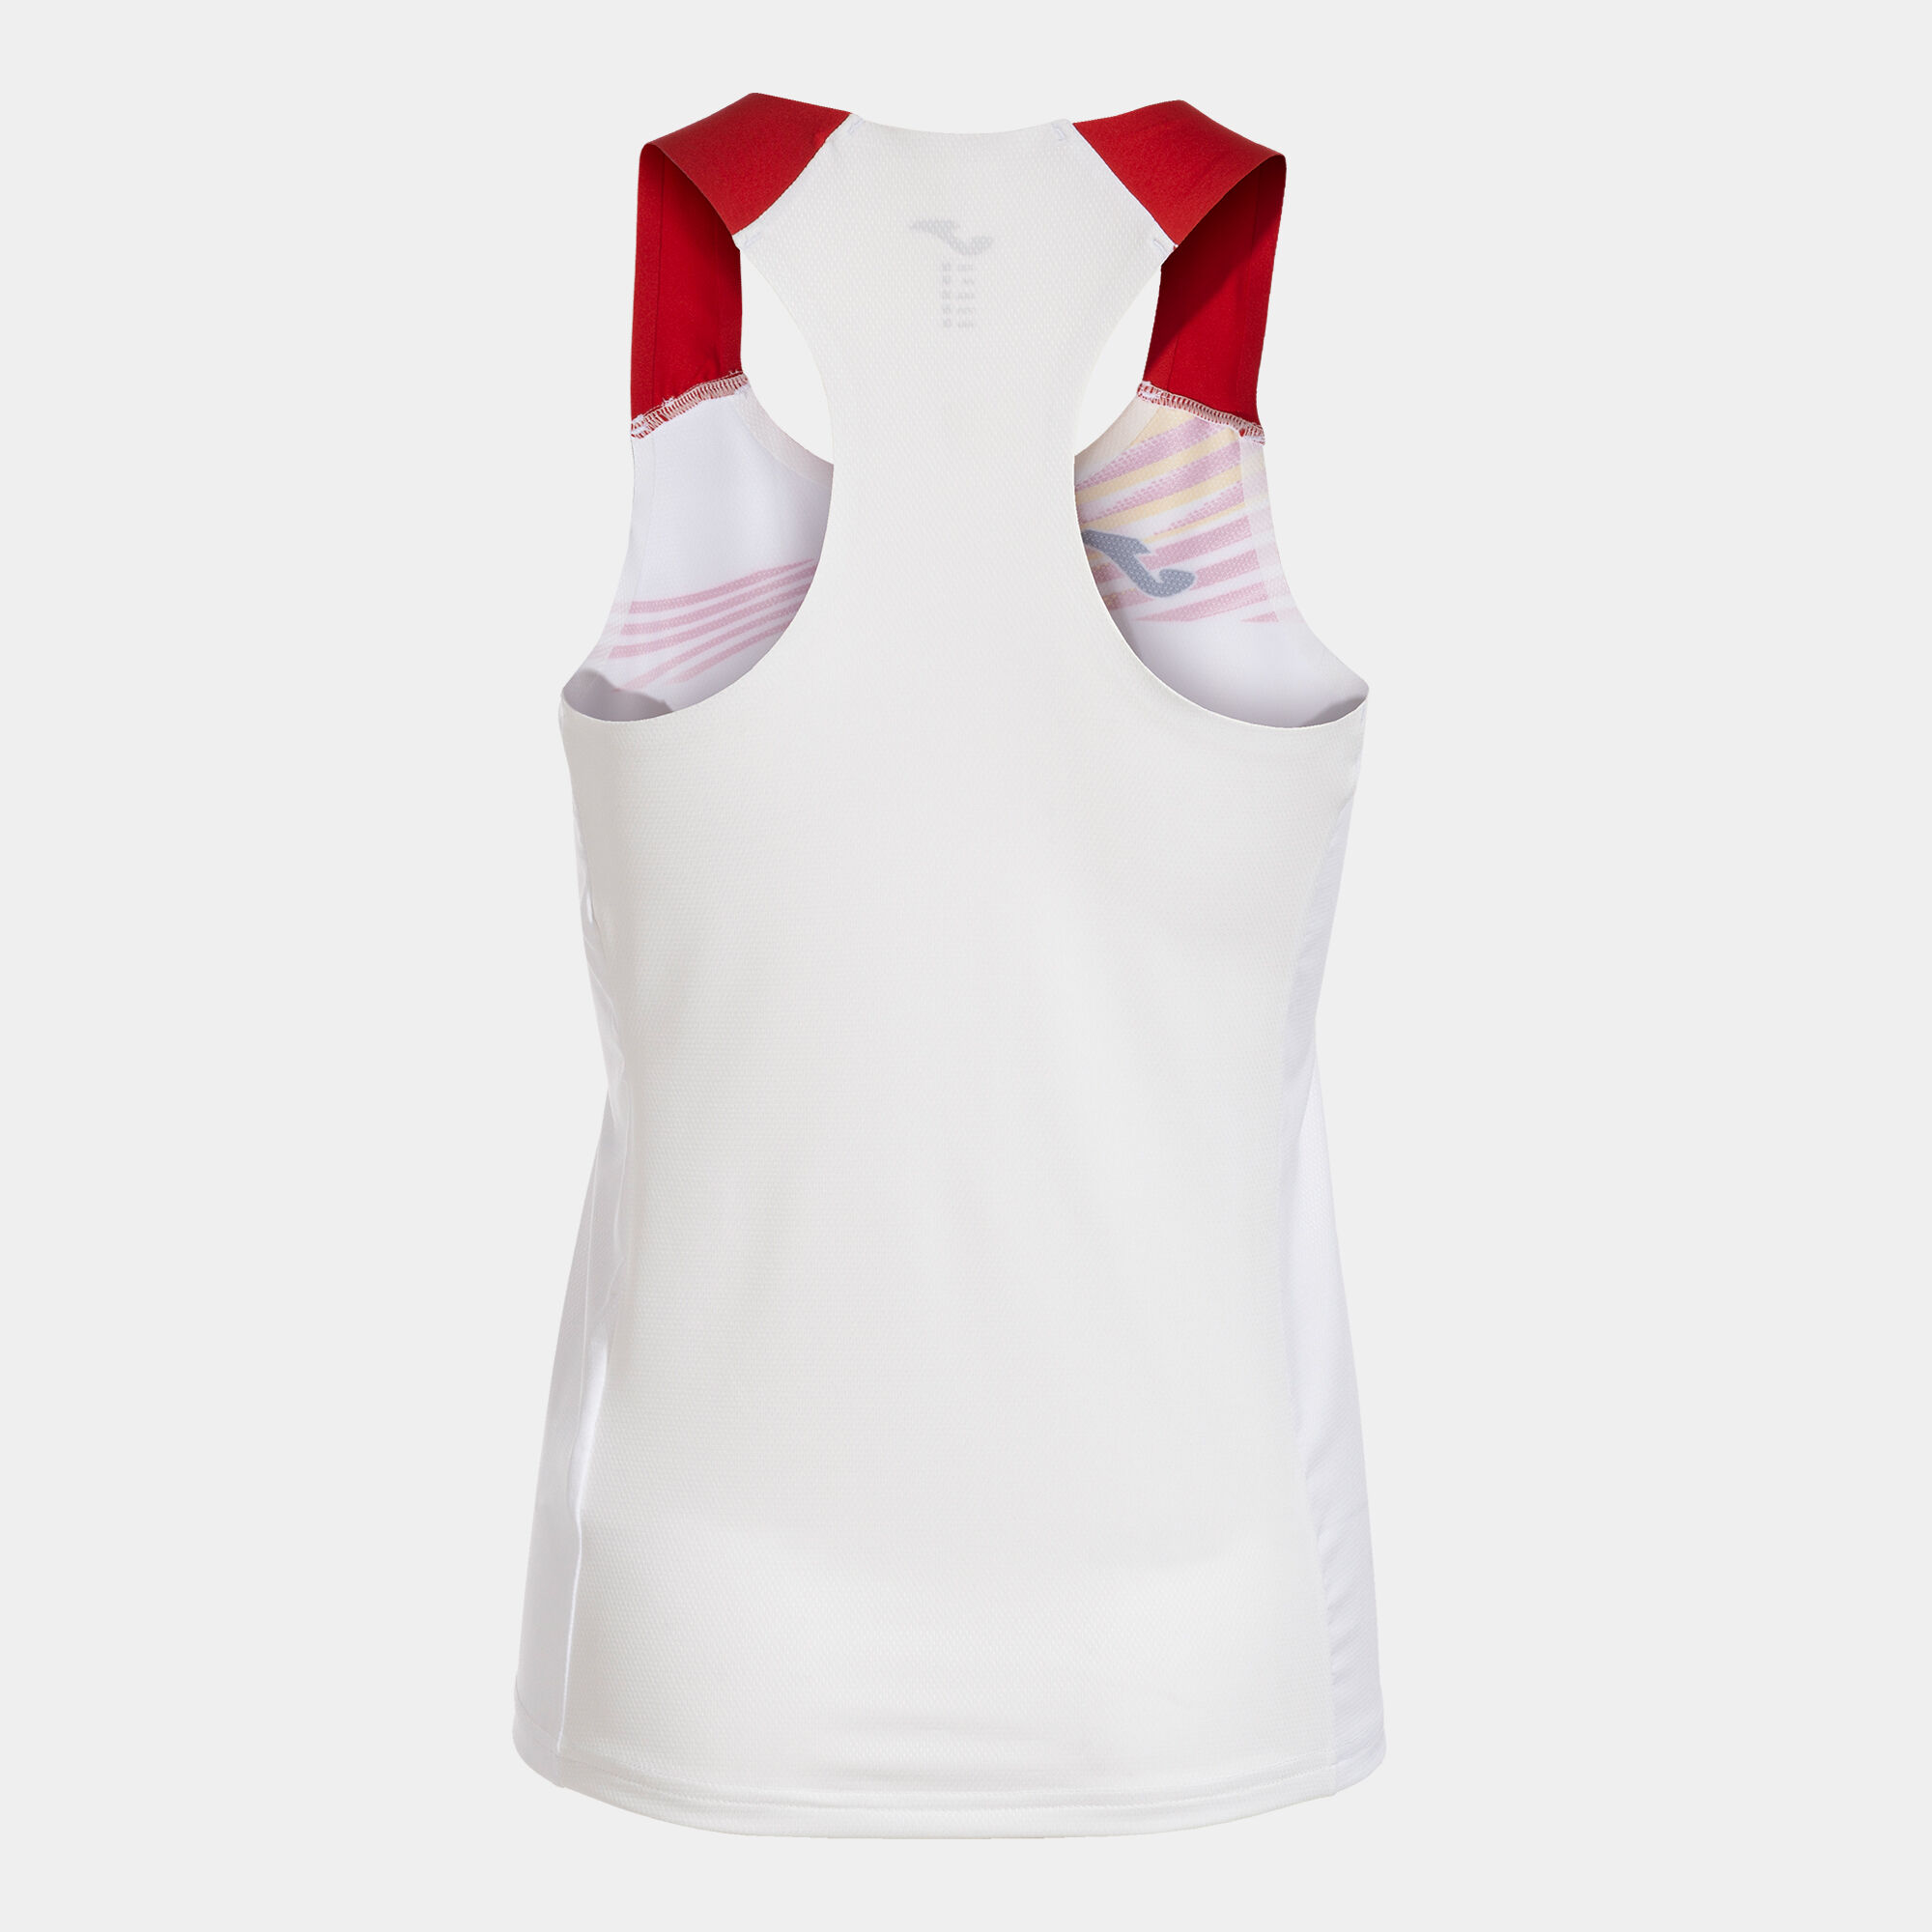 Camiseta tirantes mujer Elite X blanco rojo